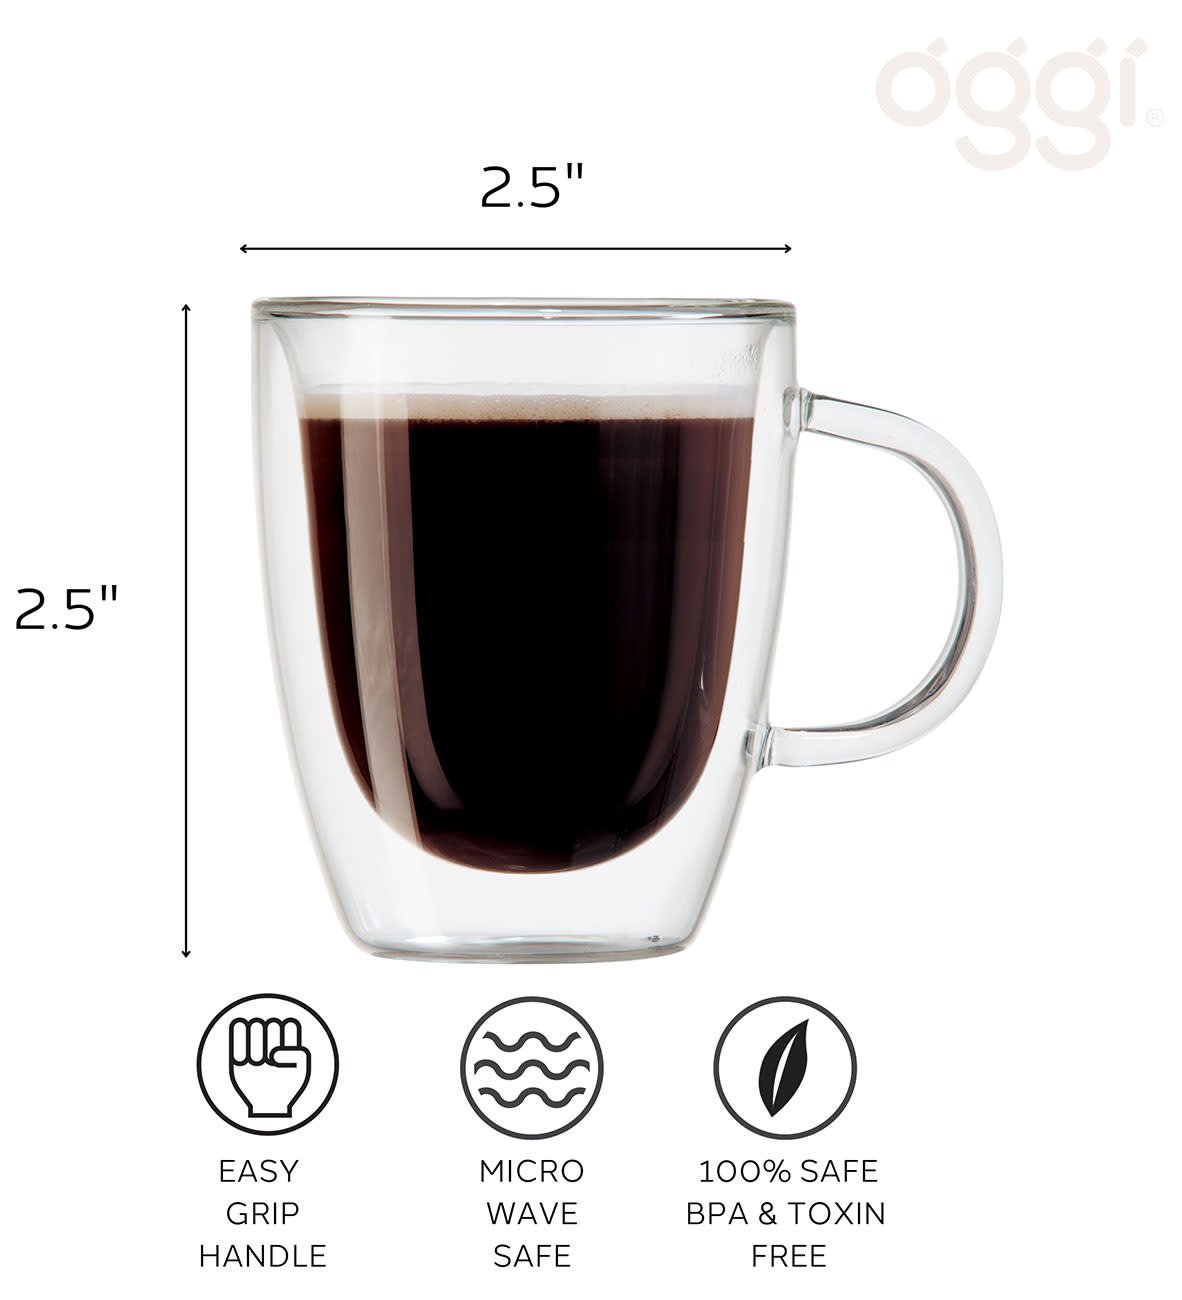 Coffee Mug Warmer with Mug, Regal Crown Lid and Spoon Included